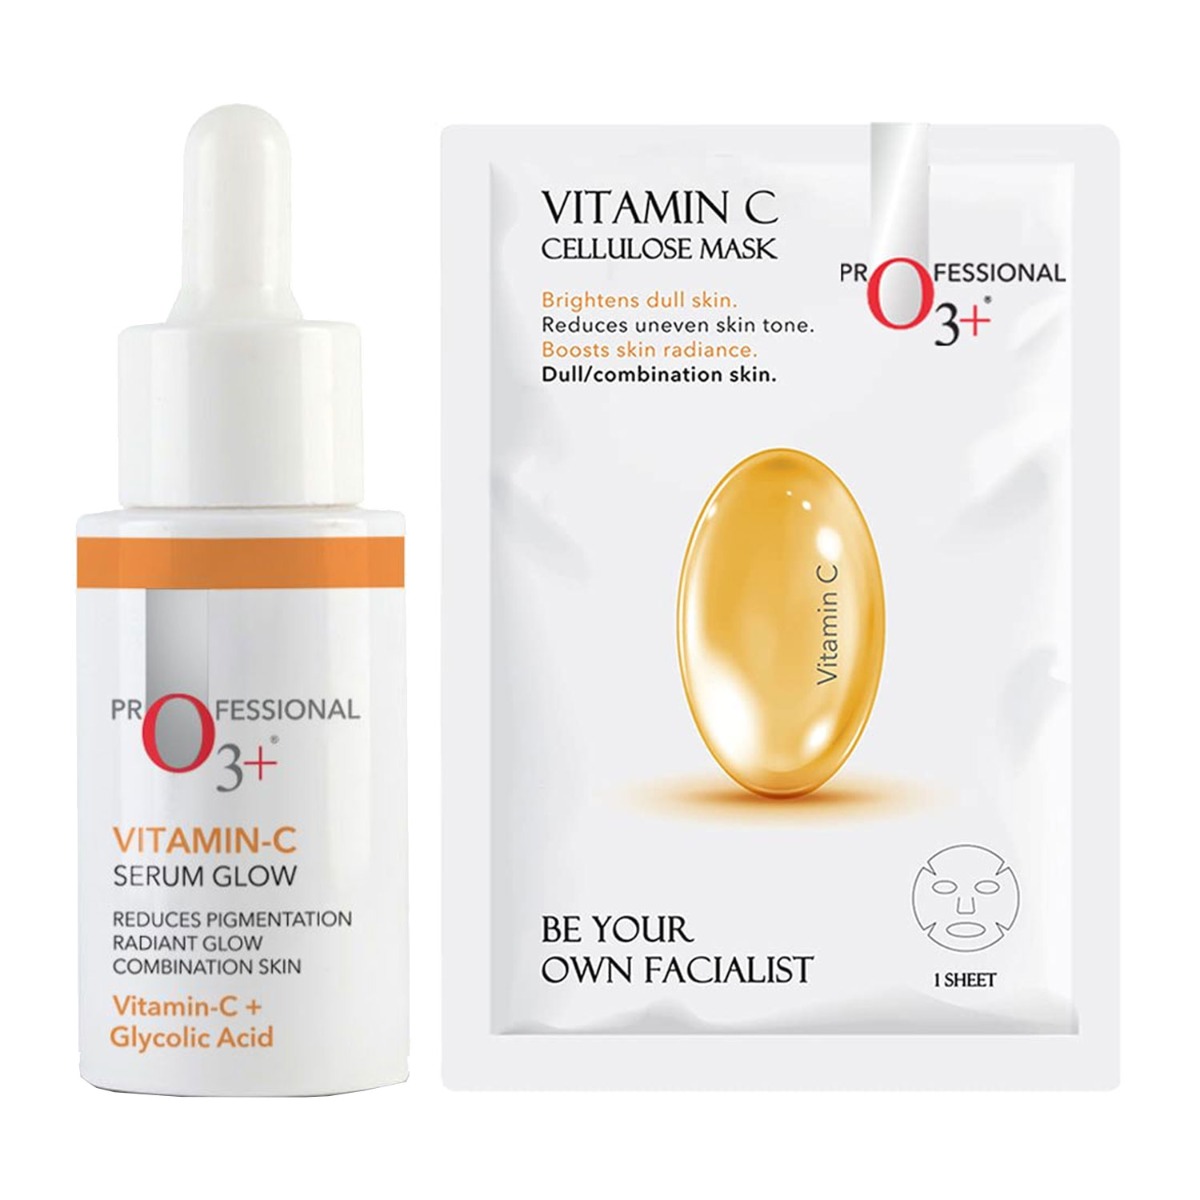 O3+ Professional Vitamin C Serum Glow, 30ml With Free Vitamin-c Cellulose Mask, 30gm